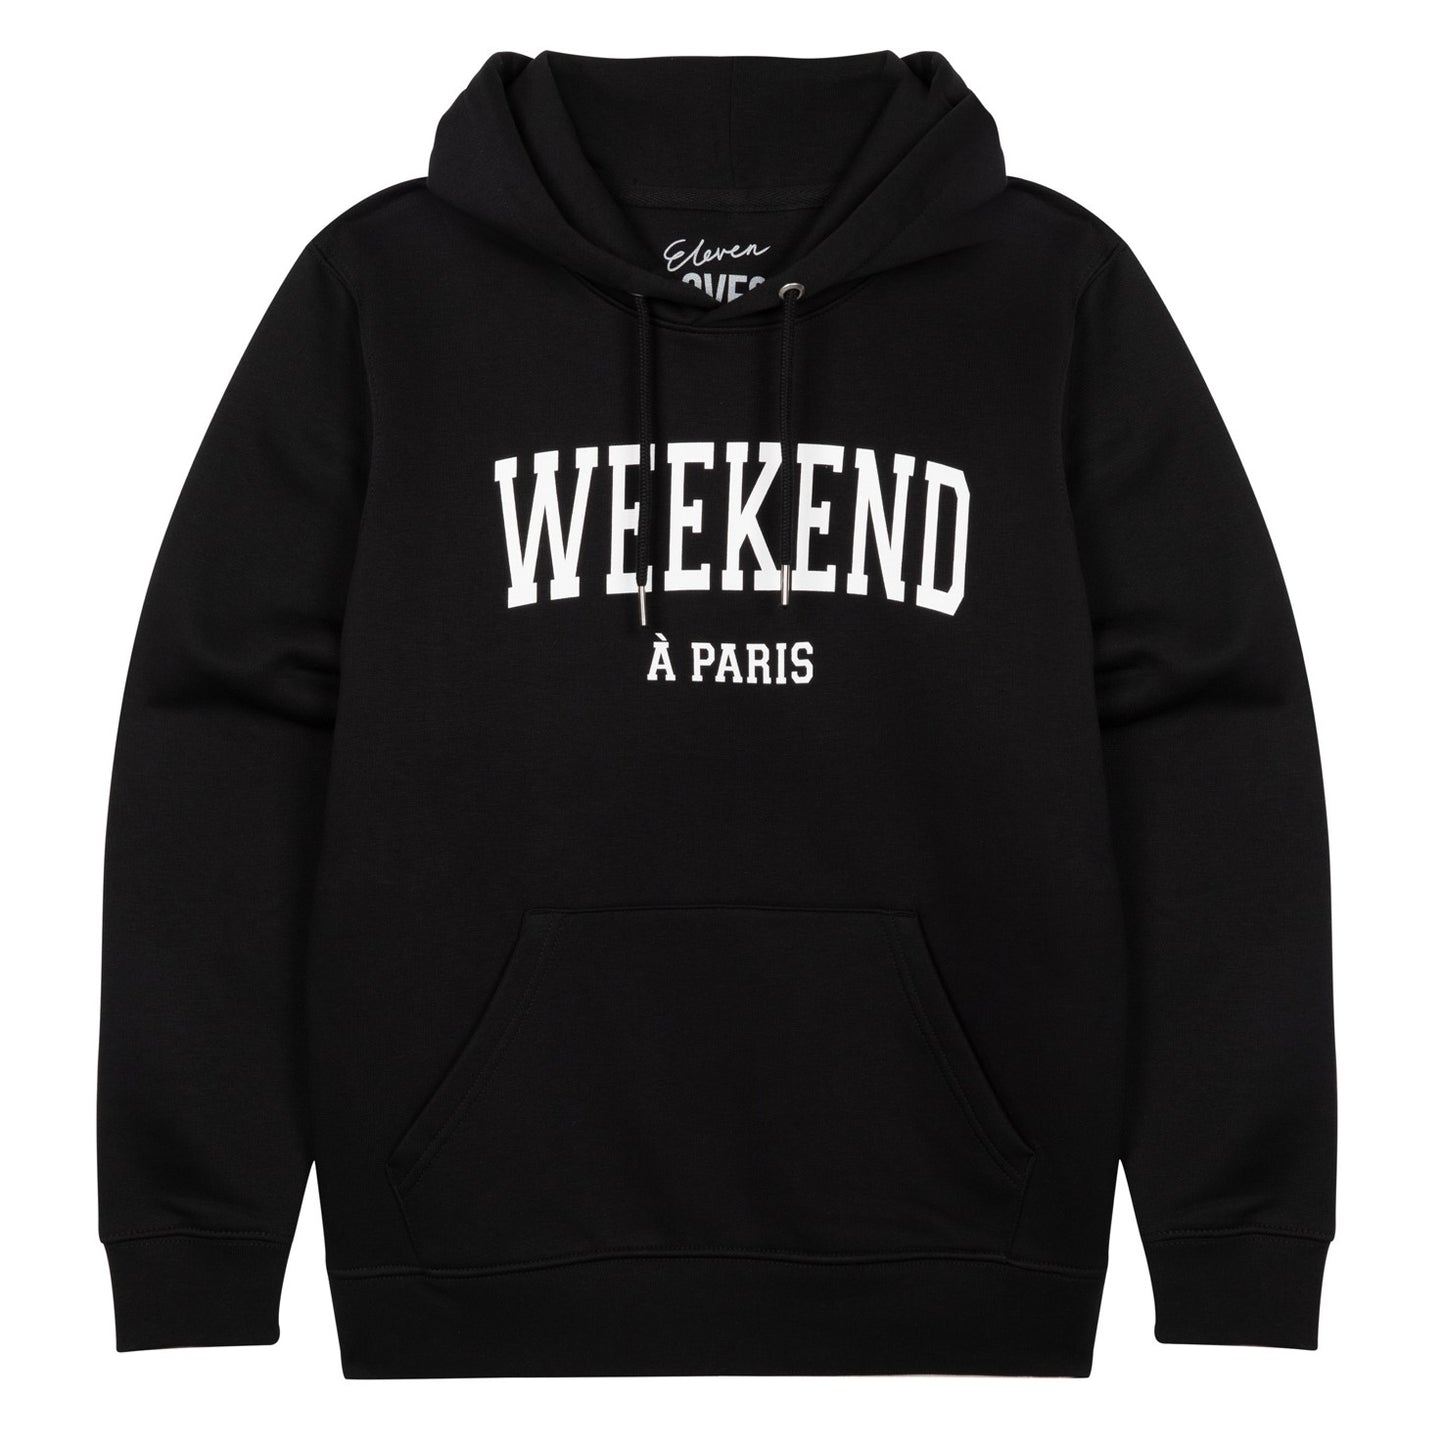 Weekend a paris hoodie black organic cotton eleven loves